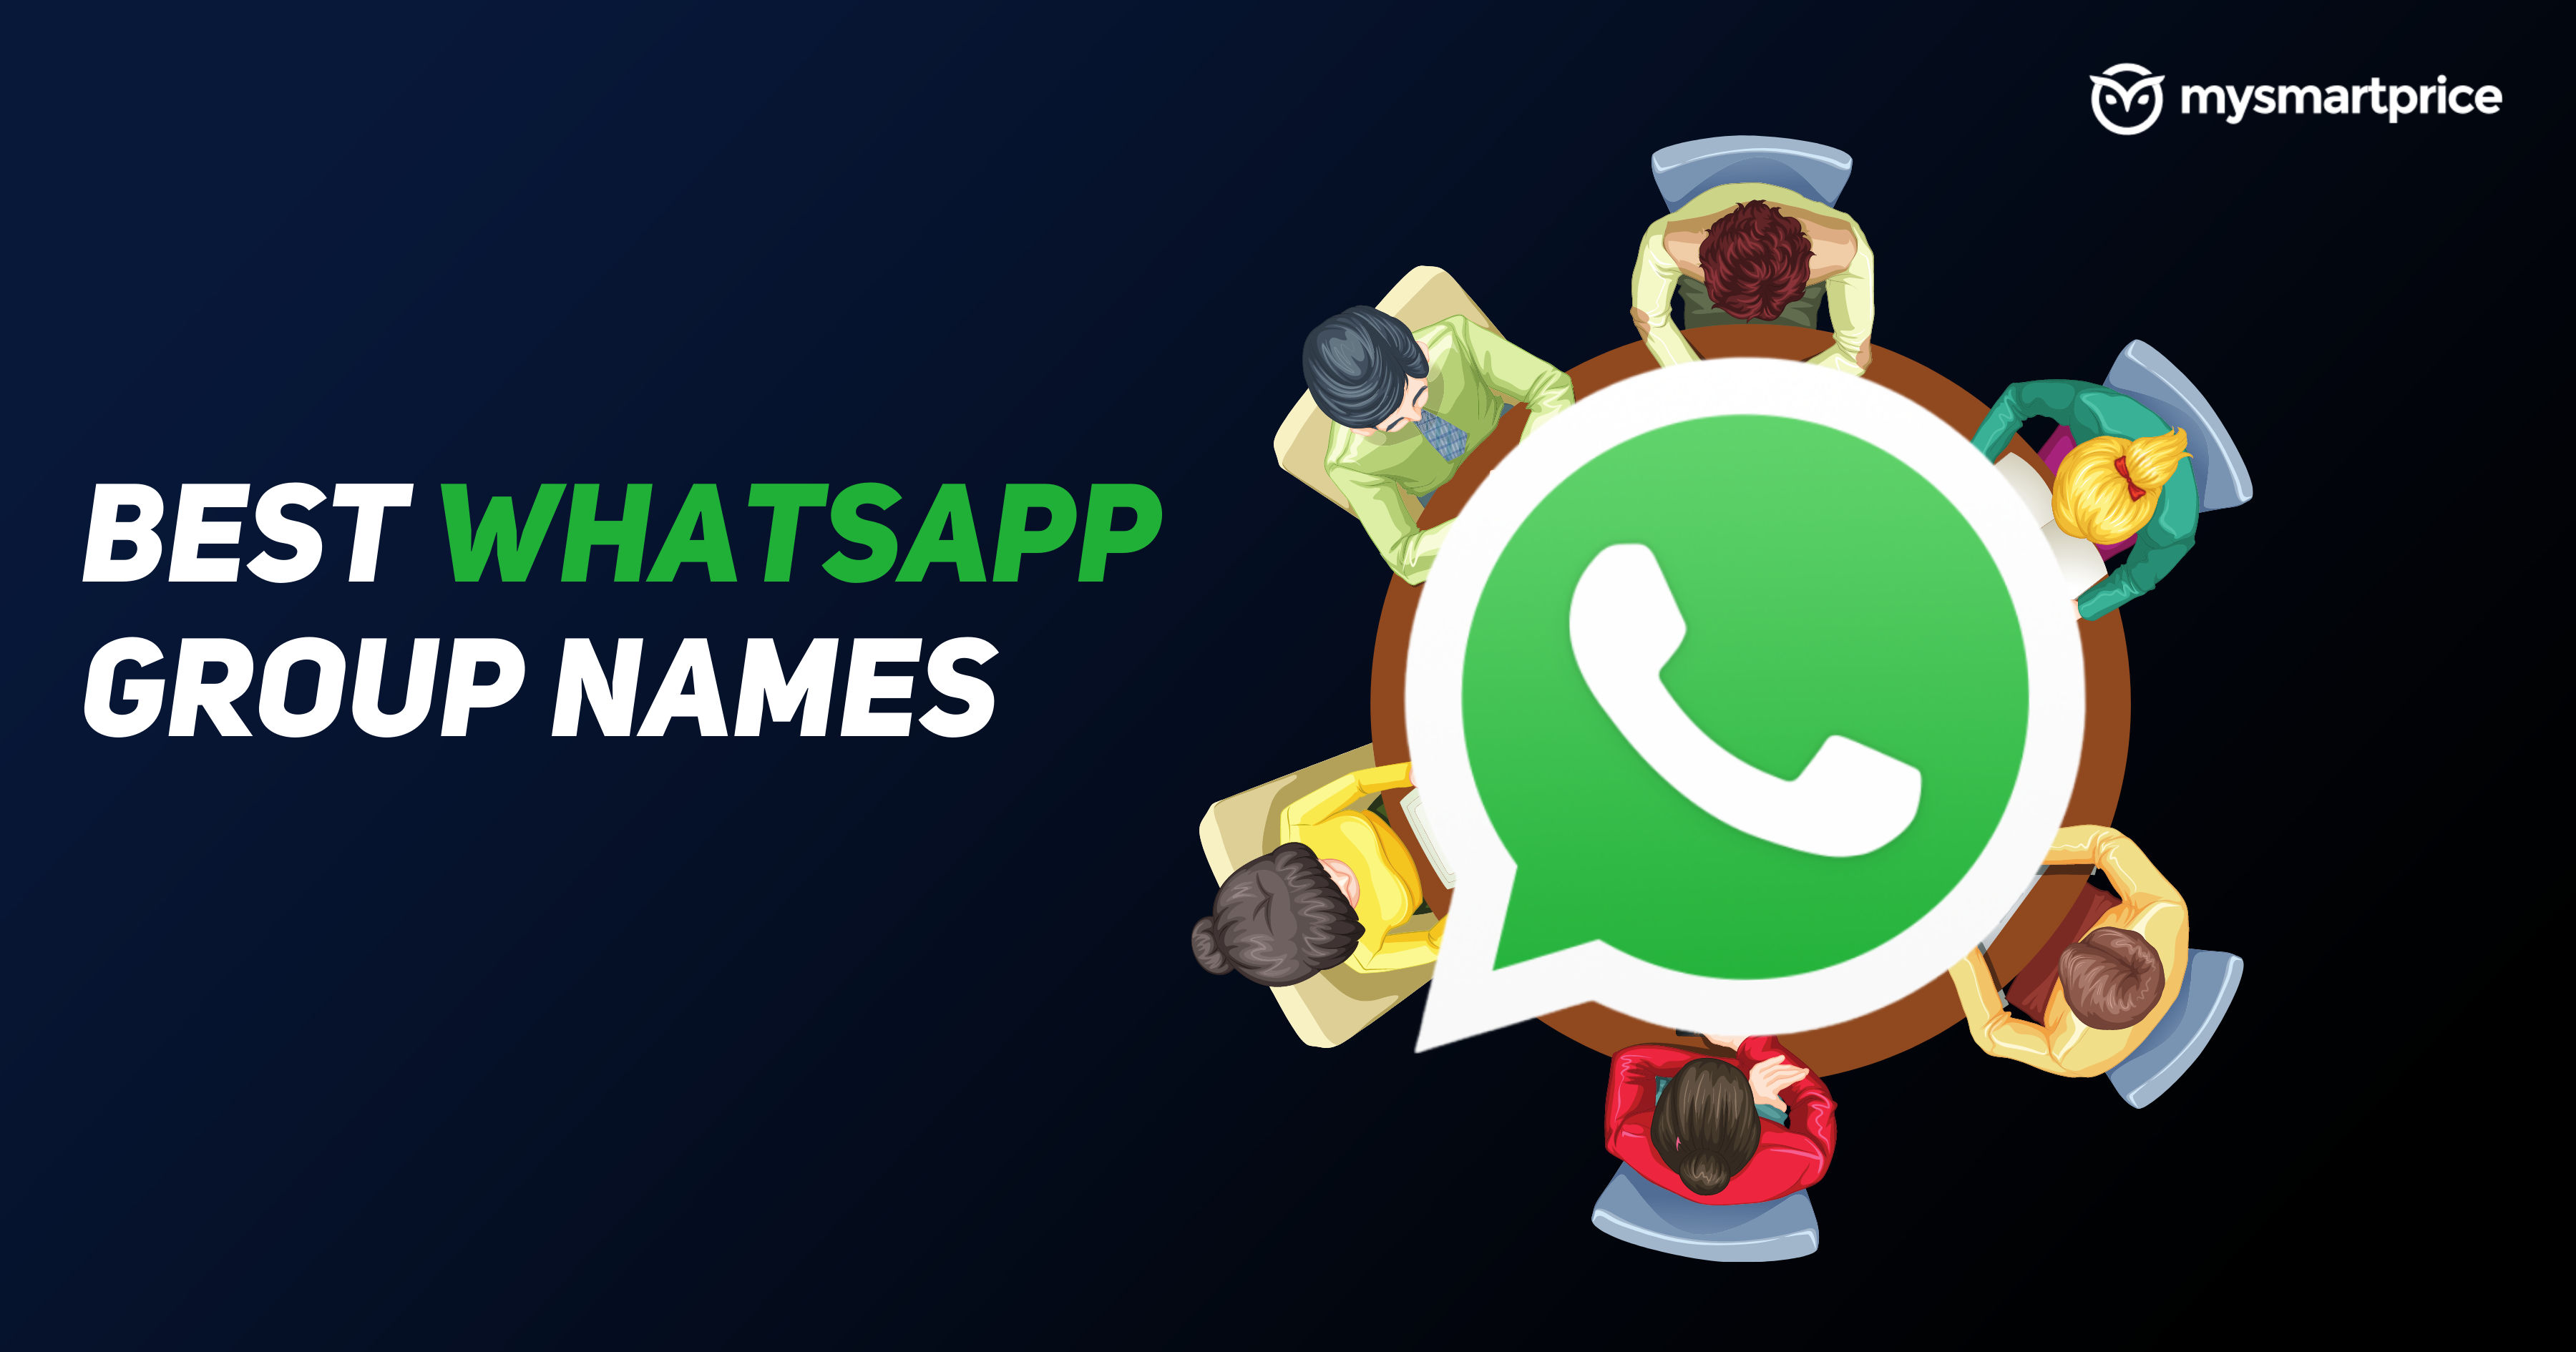 WhatsApp Group Name List: 200+ Best WhatsApp Group Names for